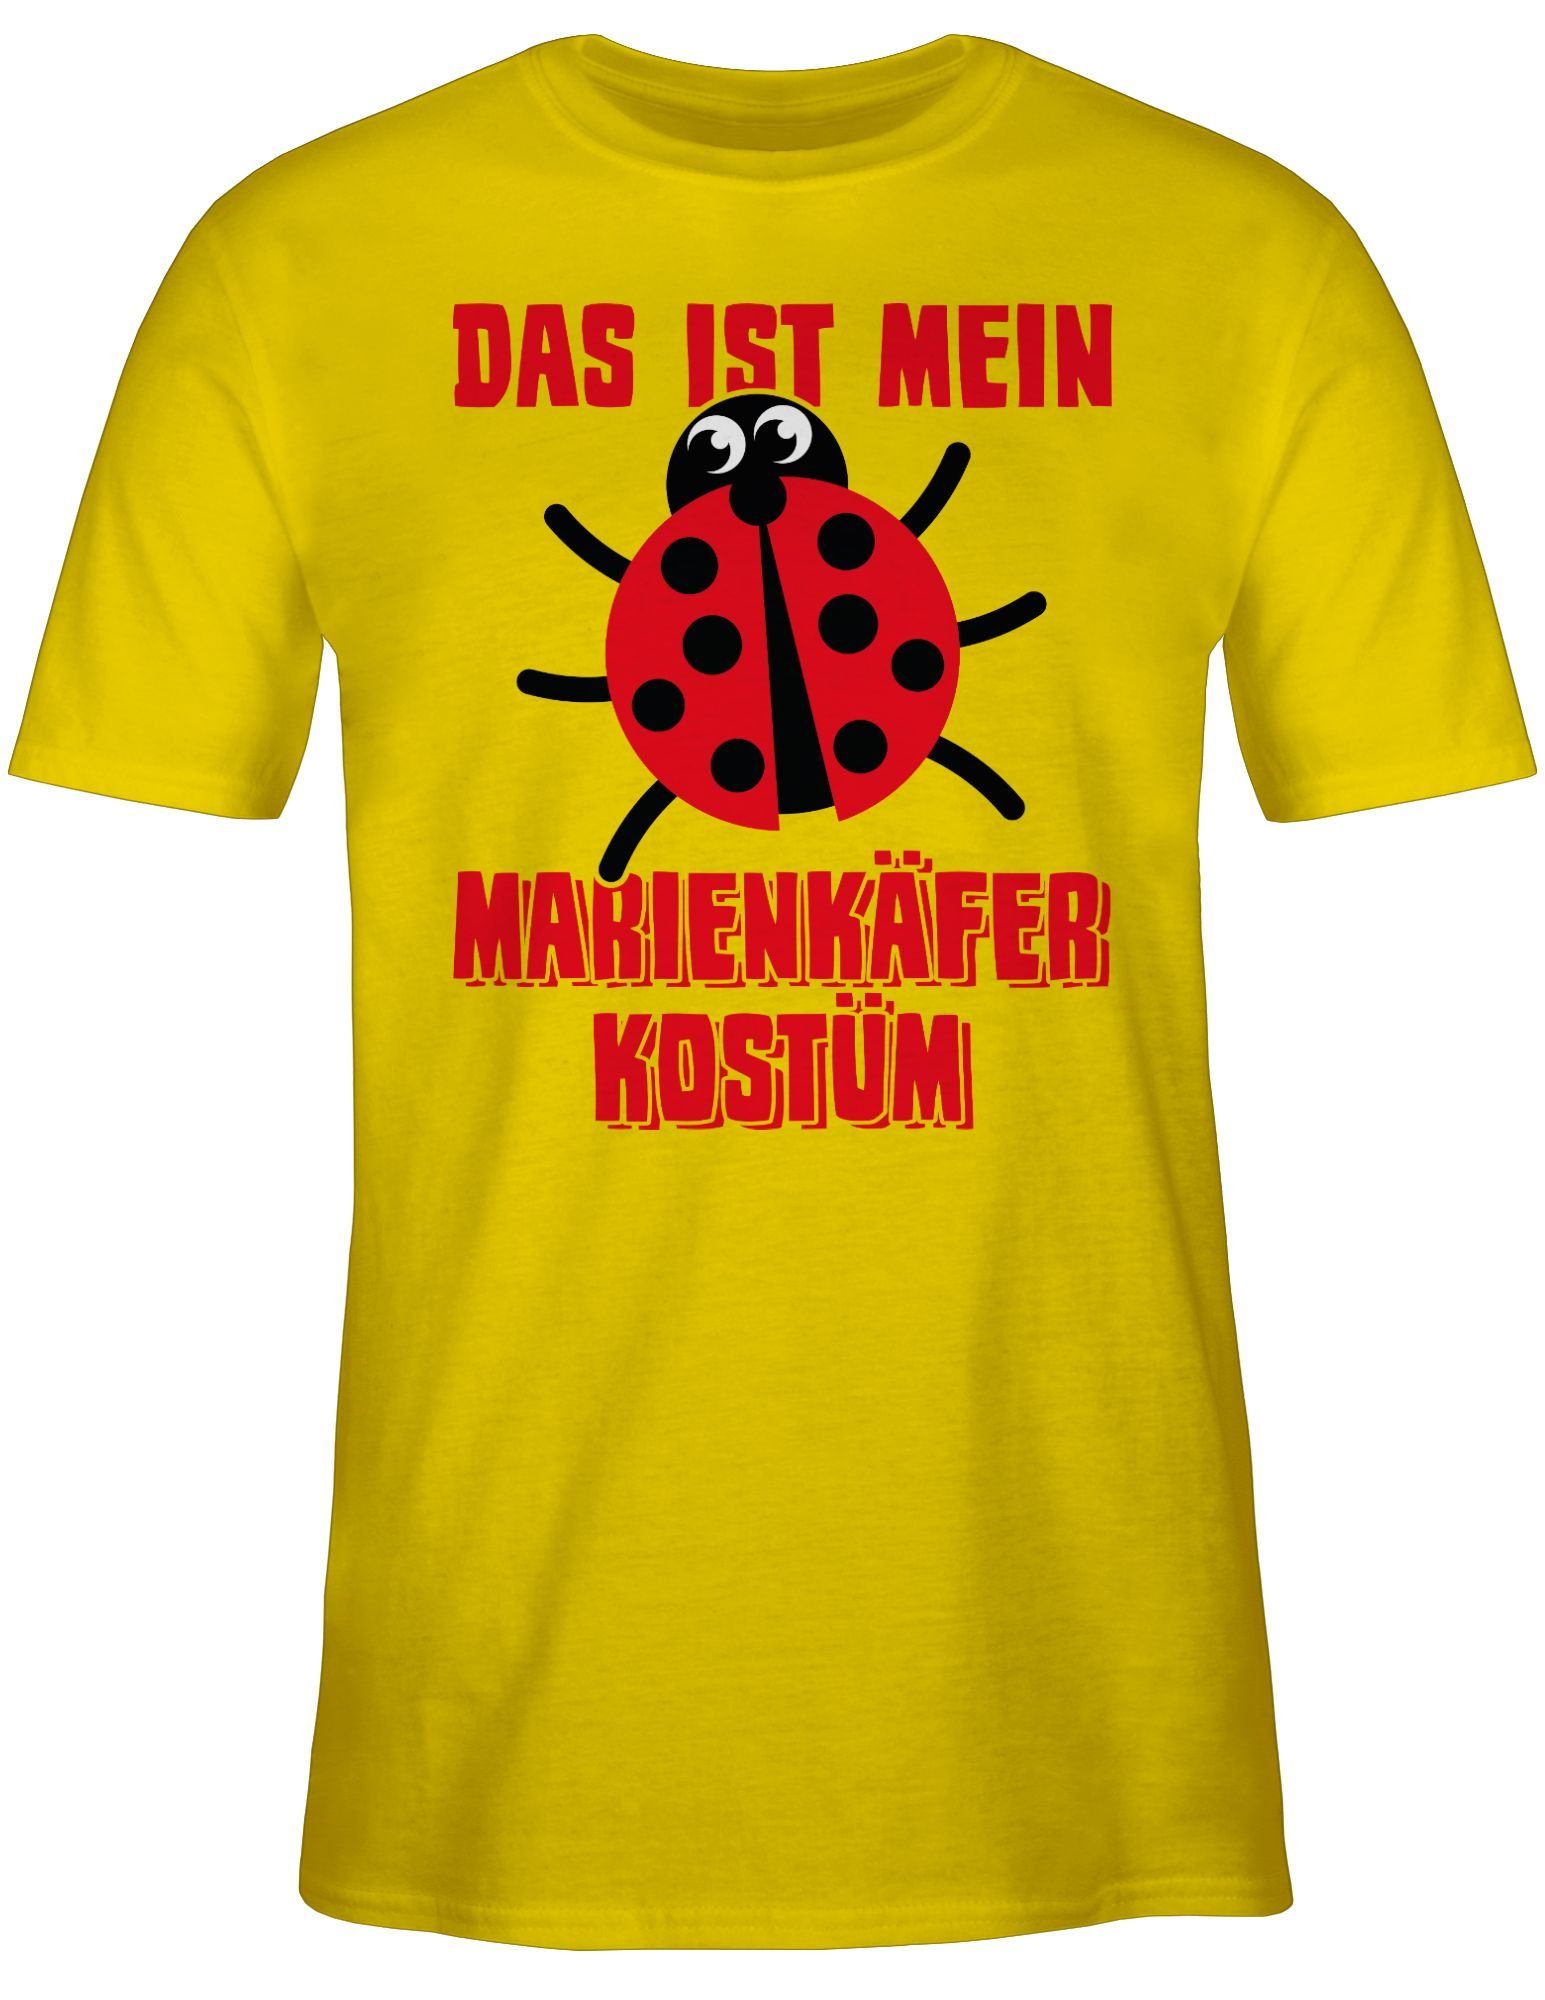 Shirtracer T-Shirt Das - Marienkaefer mein Outfit ist 2 Karneval Kostüm Marienkäferkostüm Käfer Gelb Marienkäfer